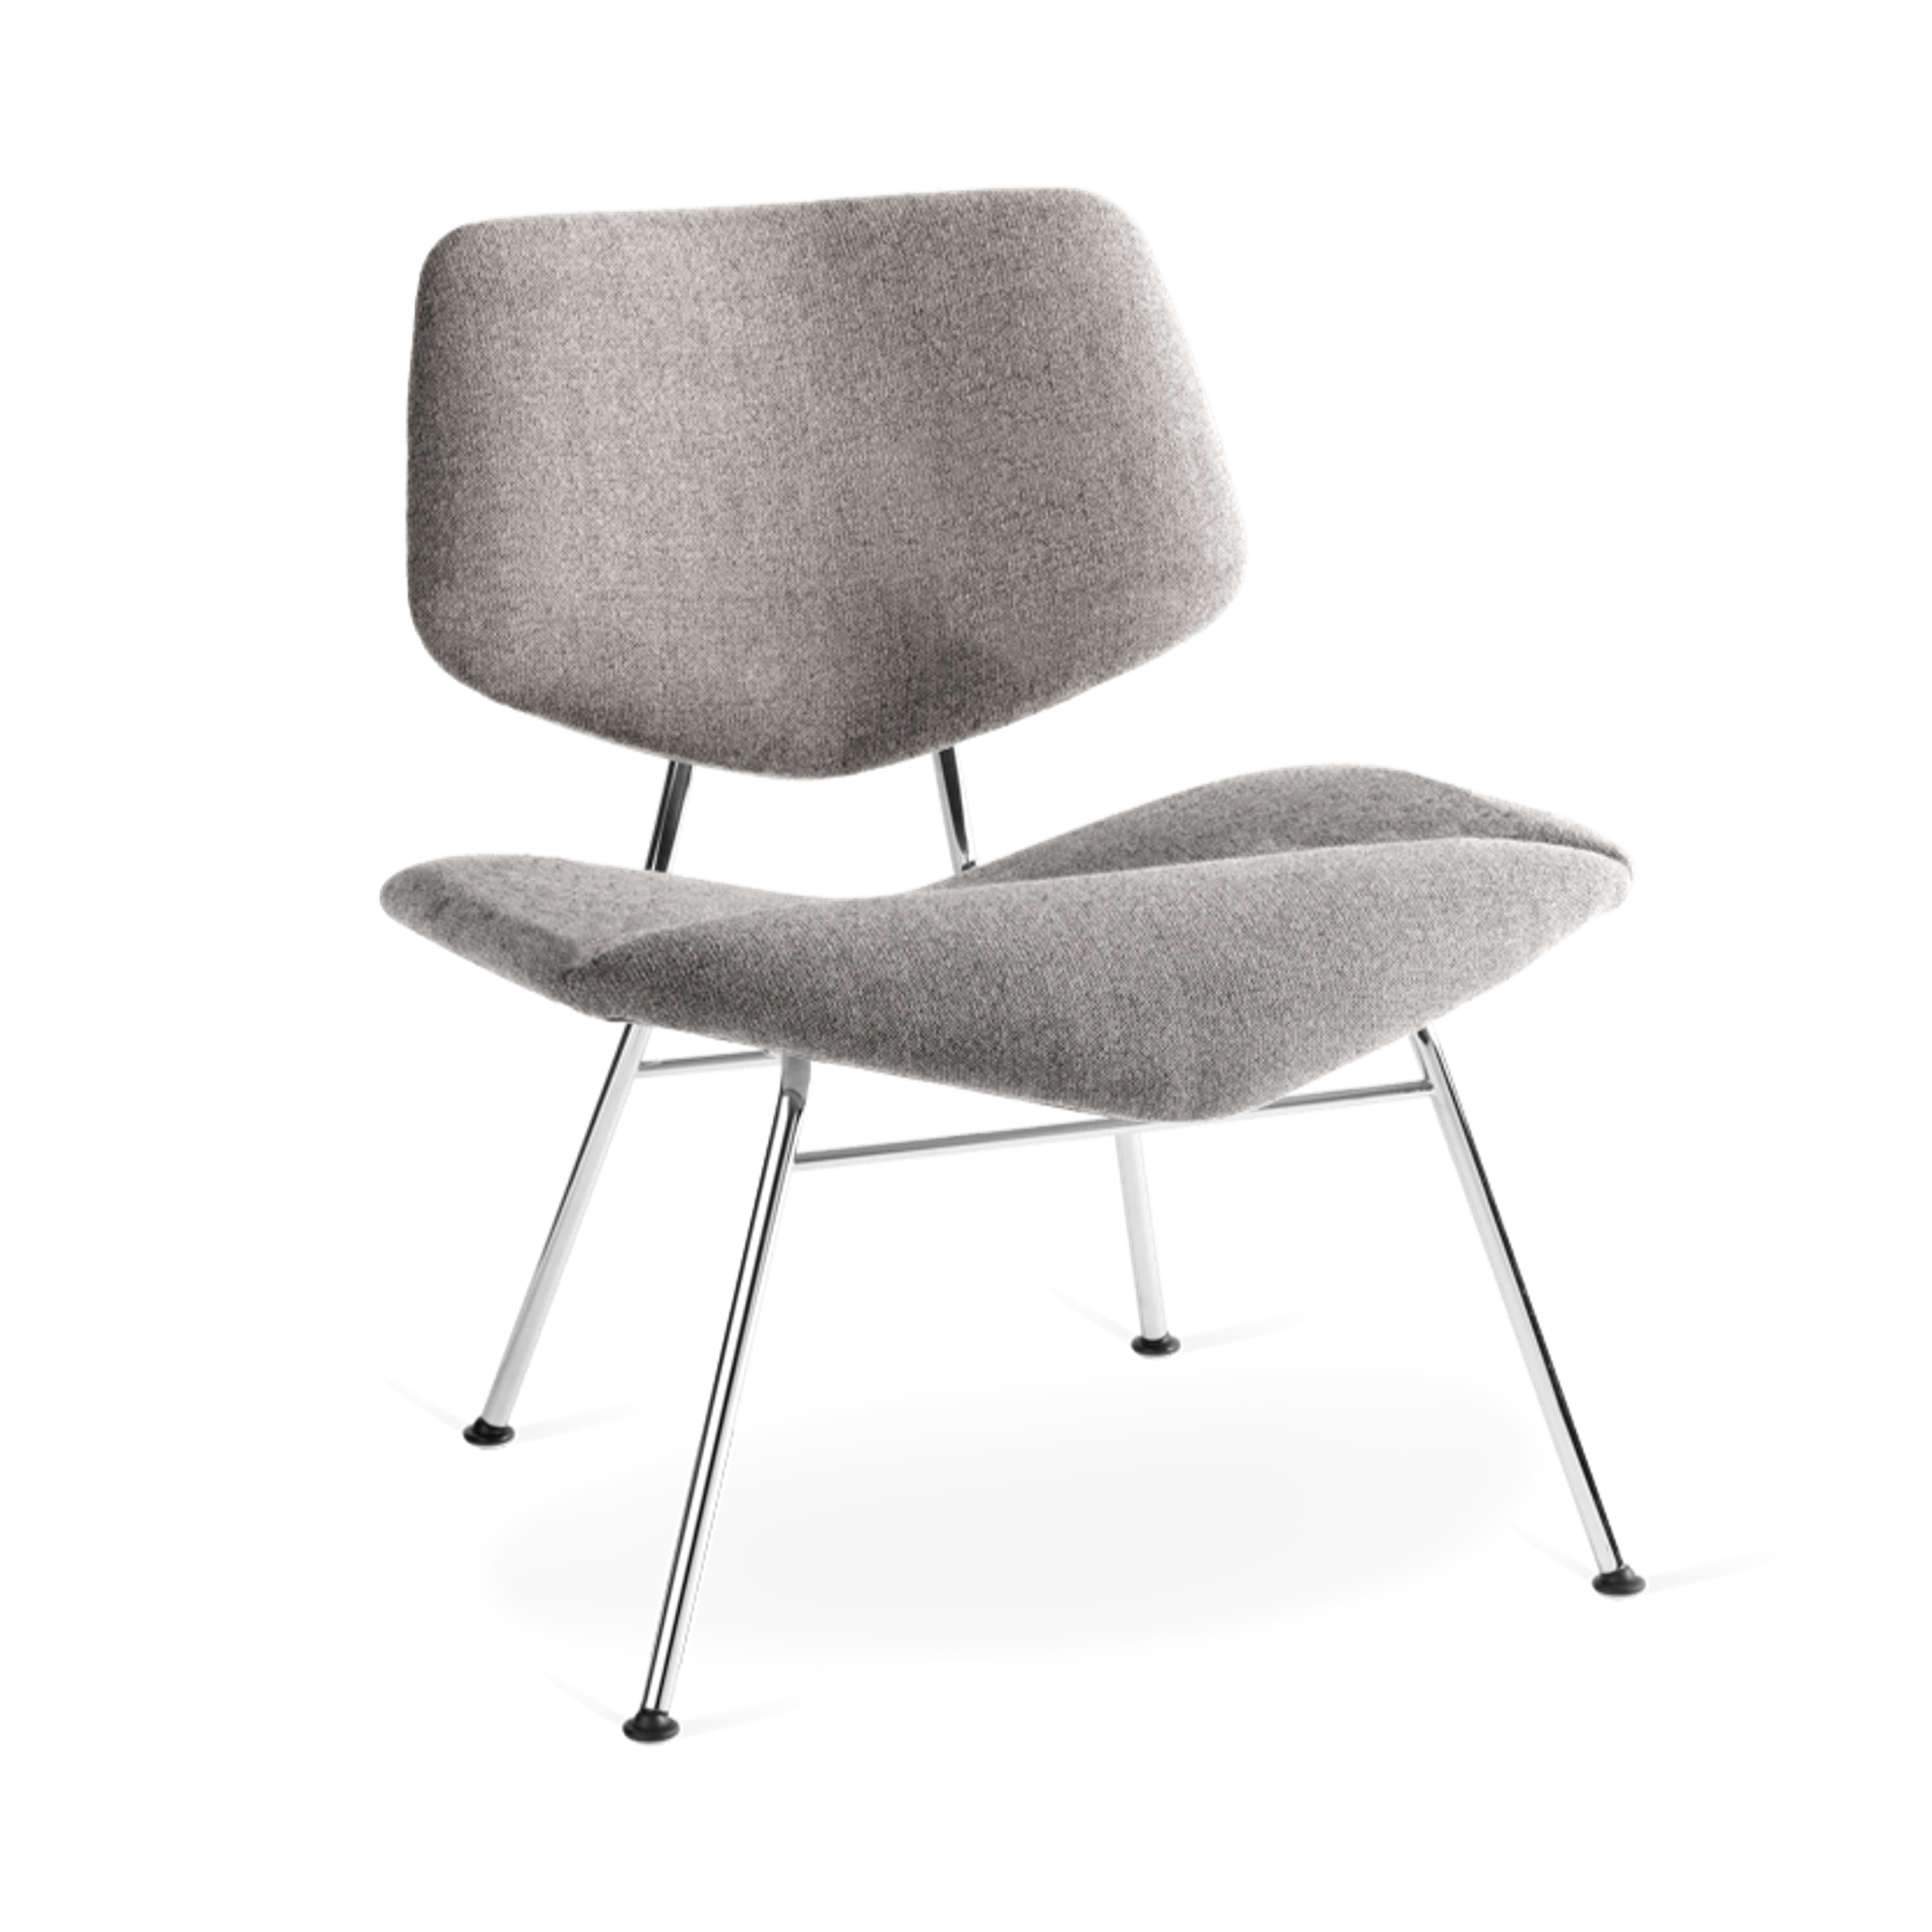 VERMUND VL135 Lounge Chair Gray Fabric/Chrome Frame